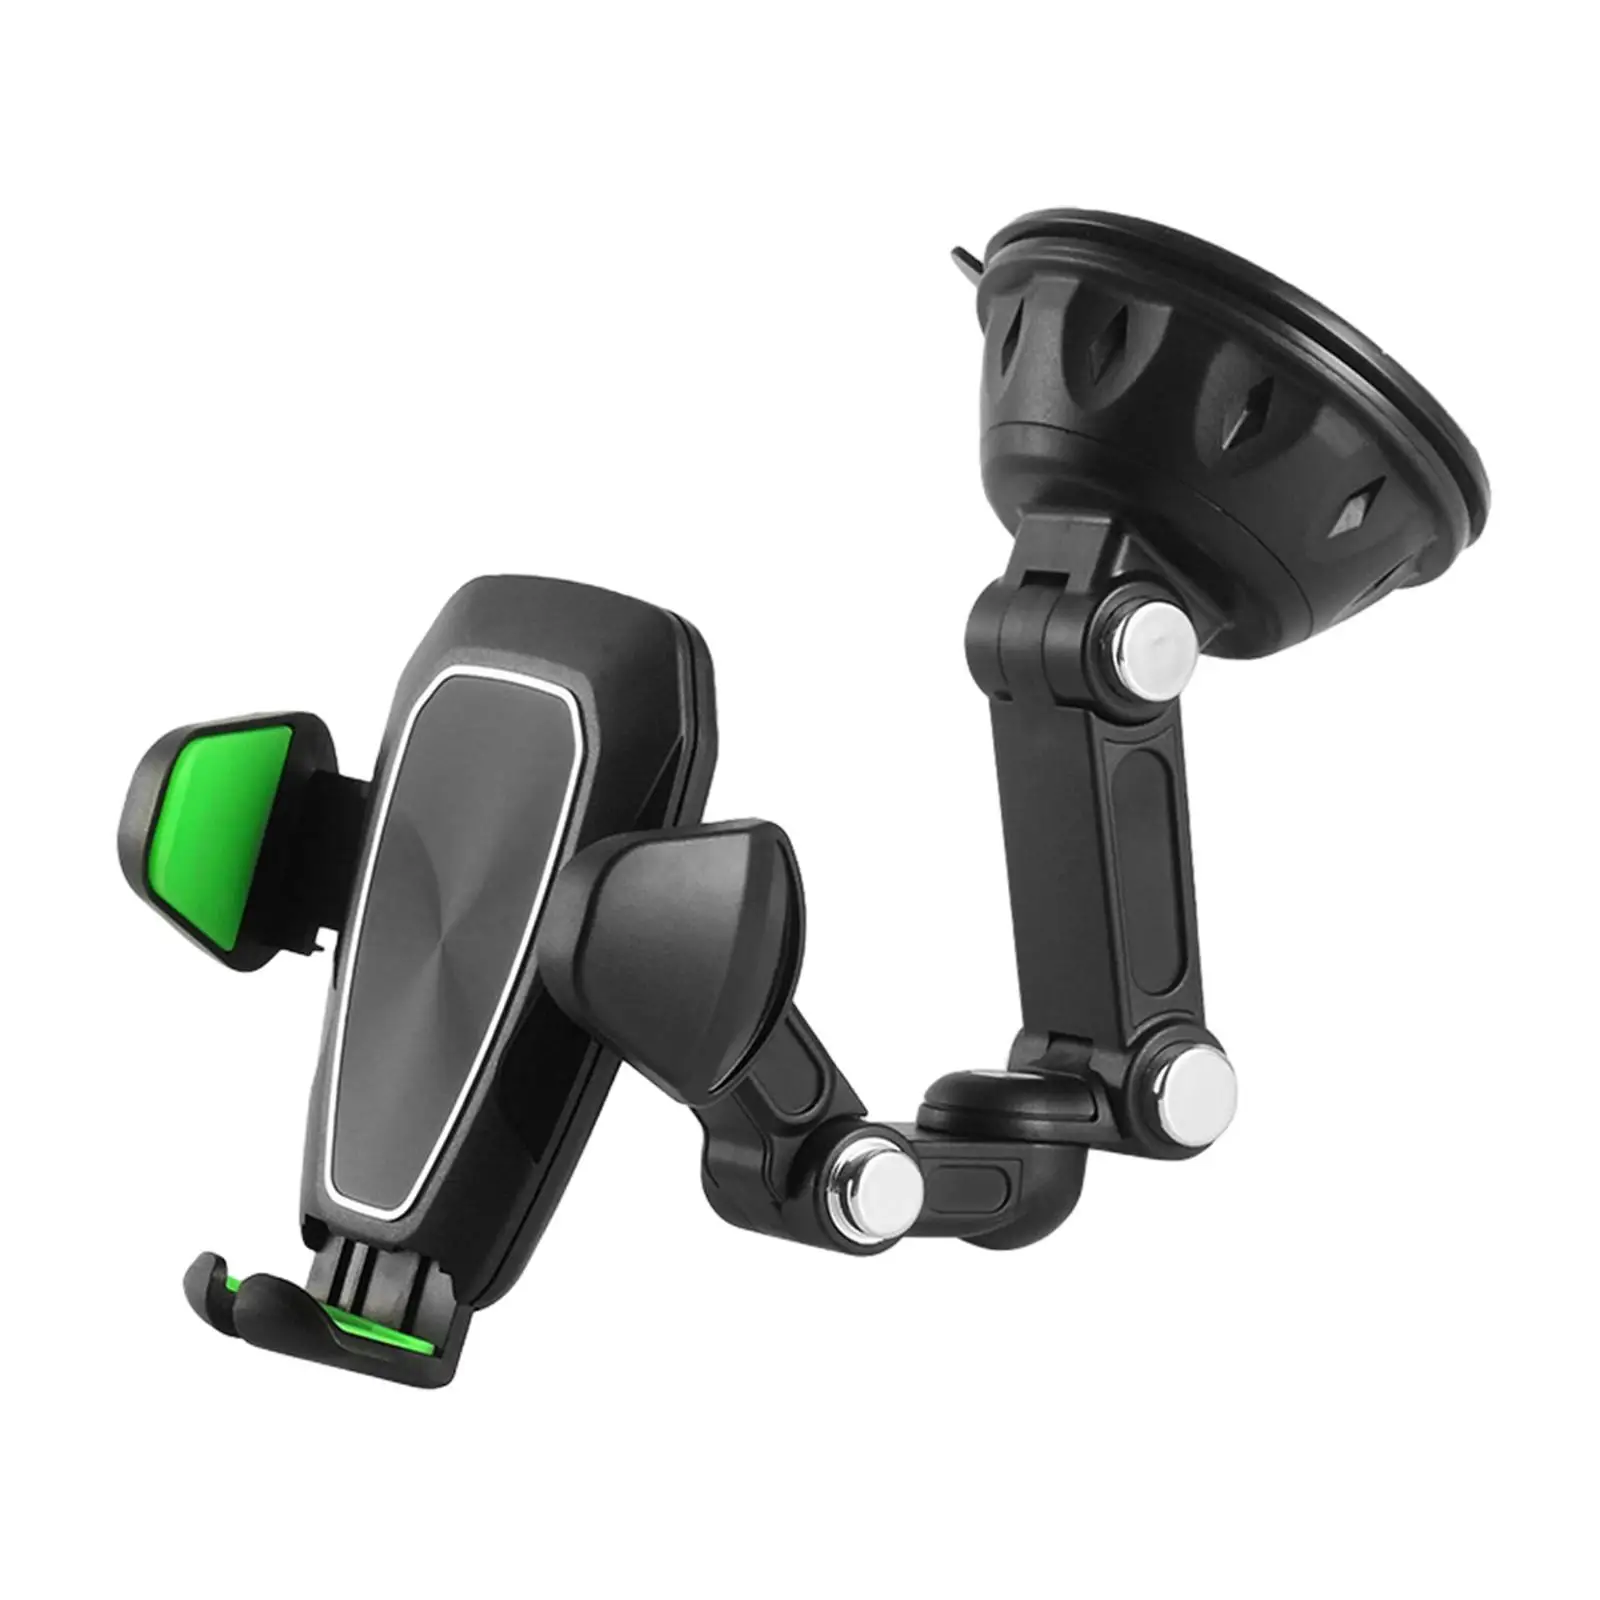 Phone Mount Telescopic Arm Universal Car Accessories Sturdy Non Slip Mobile Phone Bracket Car Phone Mount for Car Dashboard